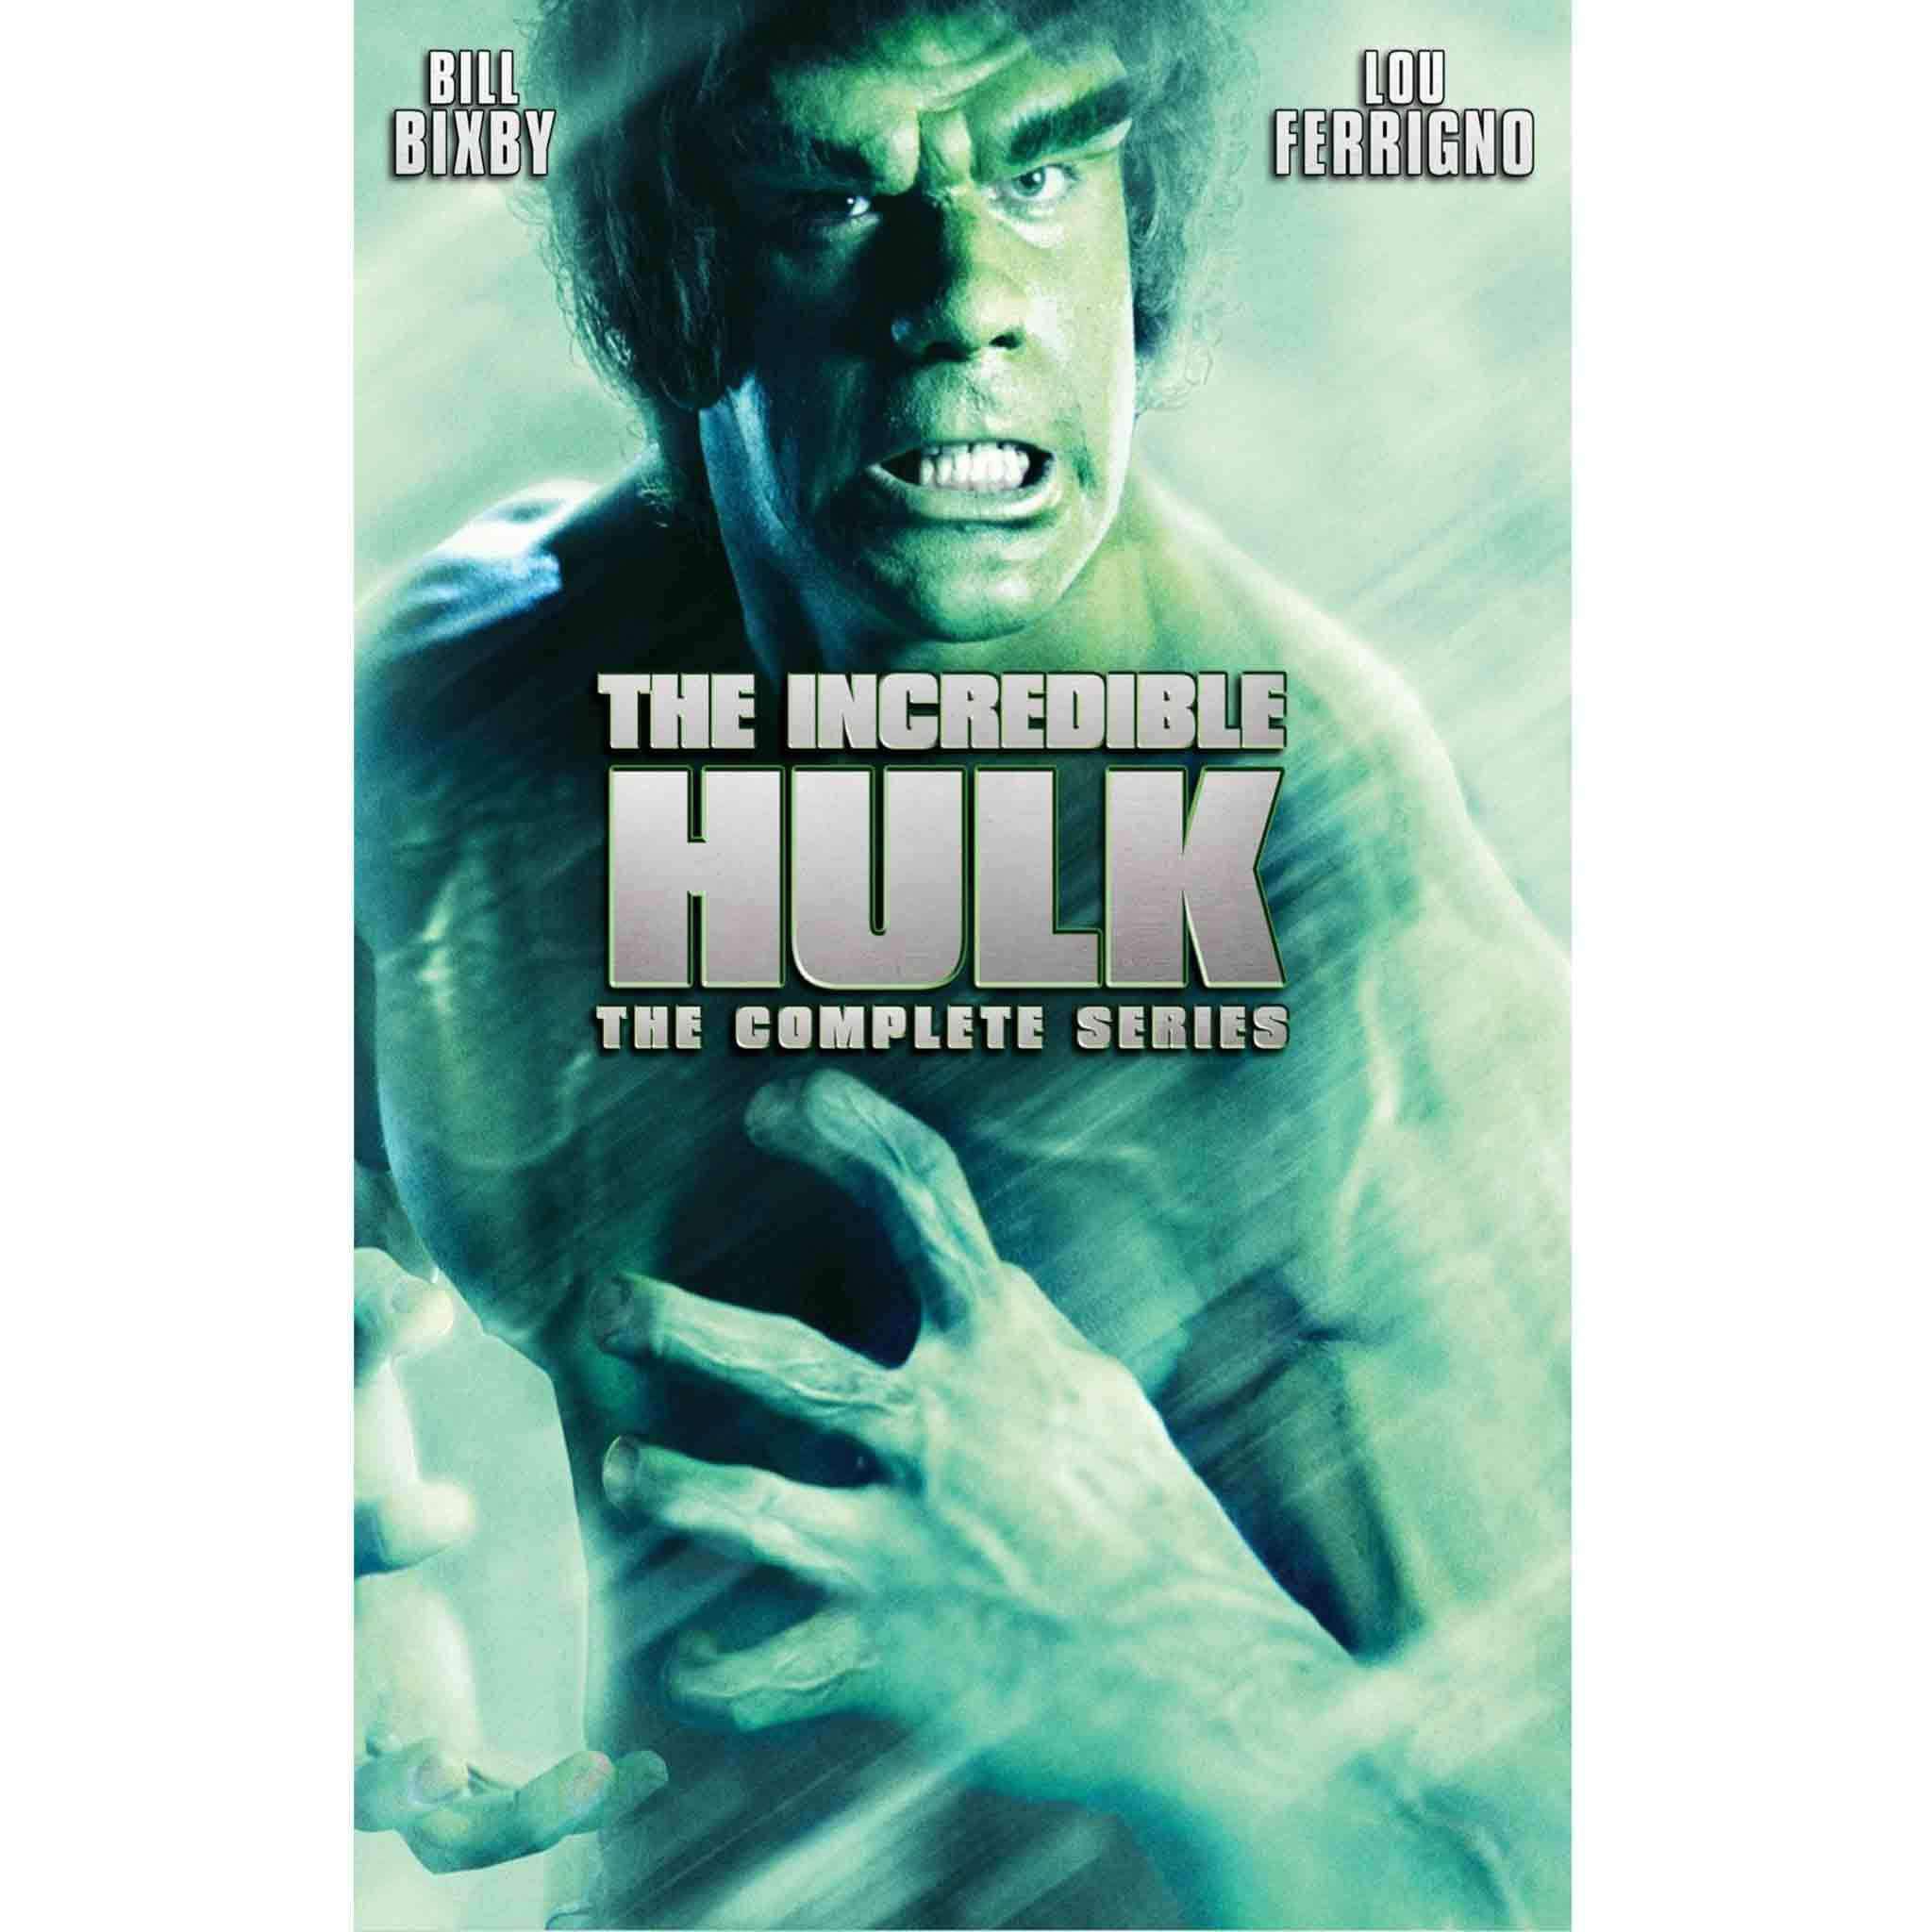 the incredible hulk blu ray cover